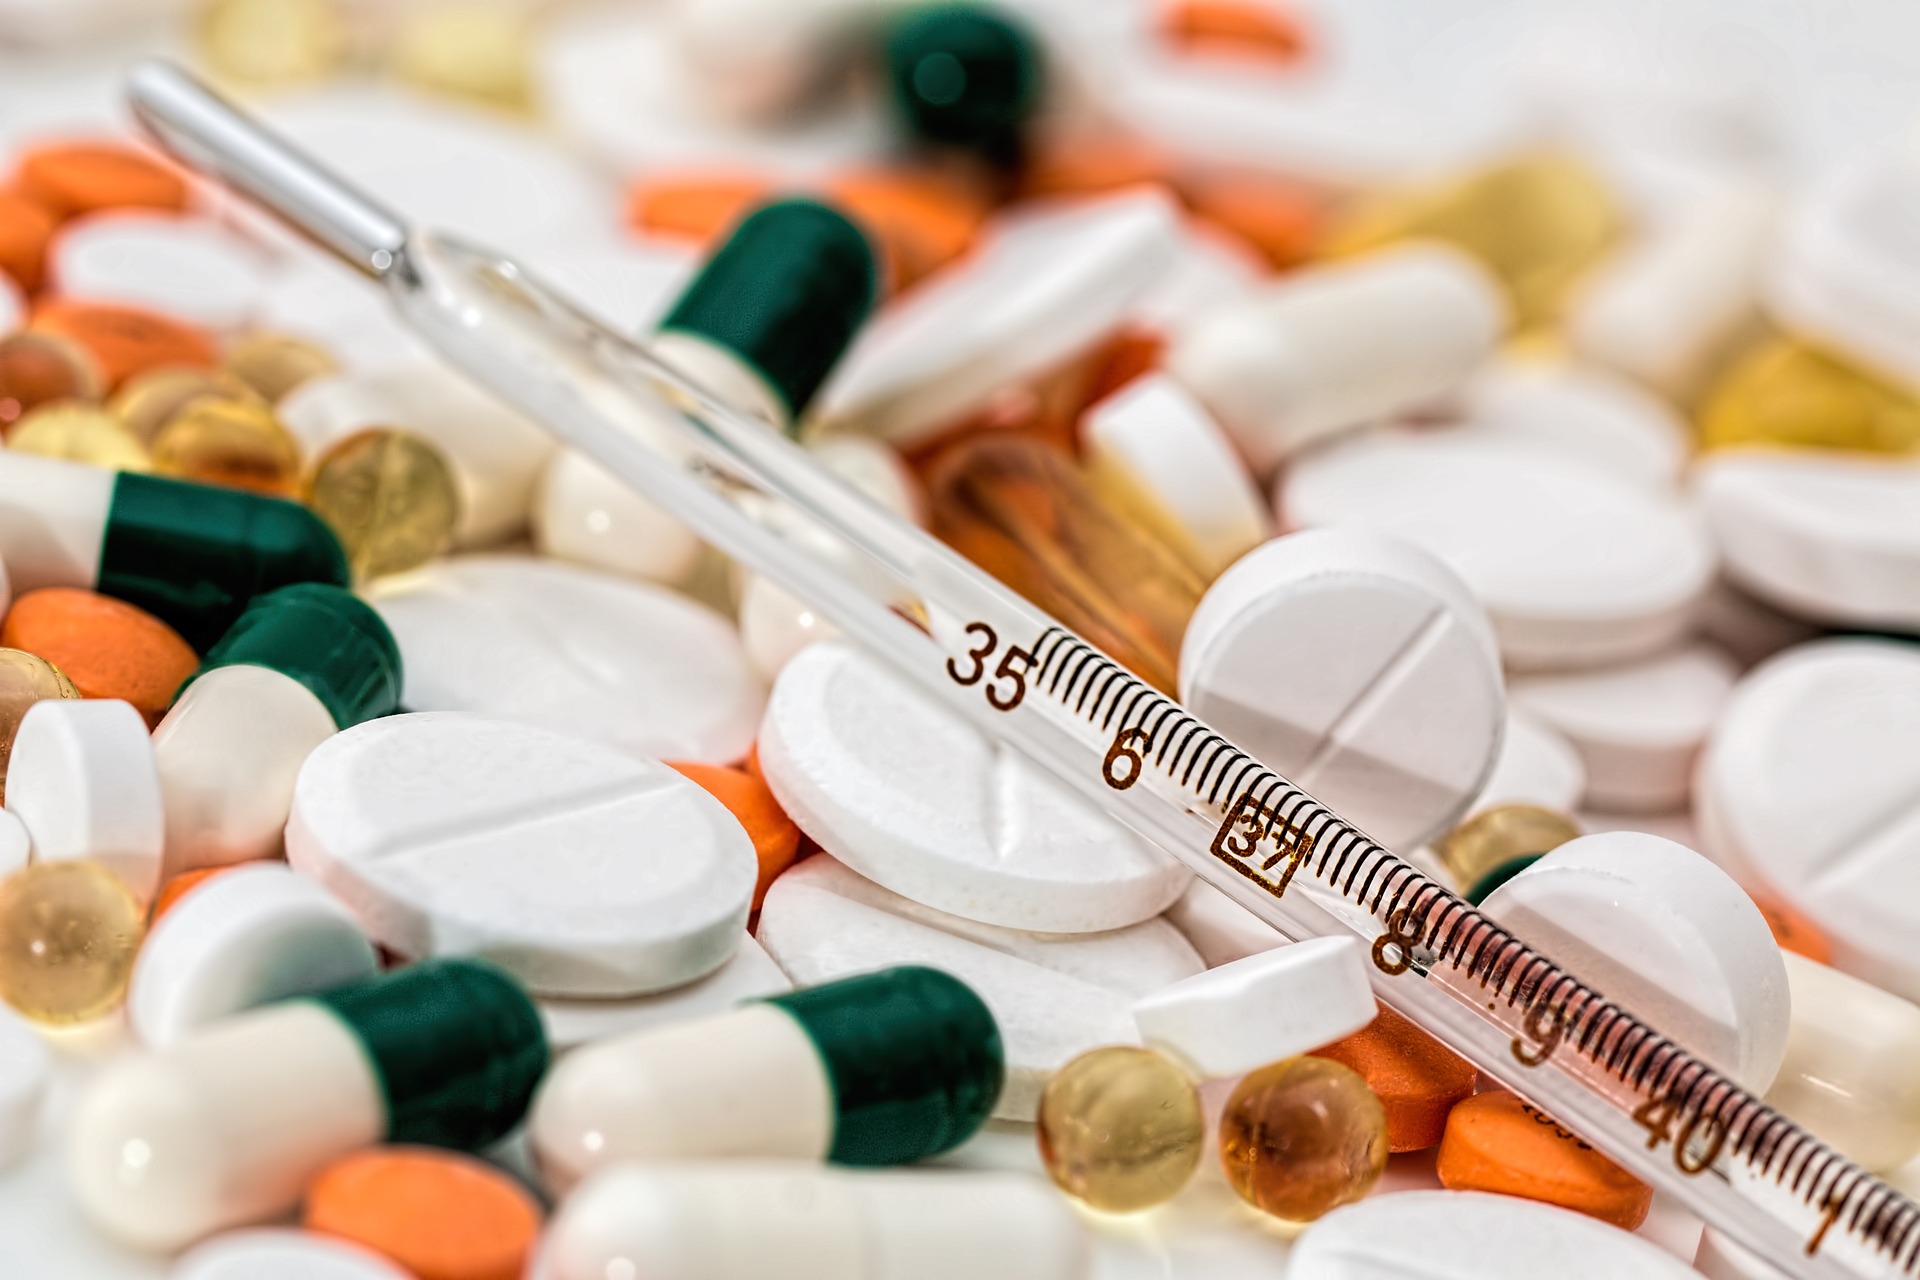 FDA Cracking Down on Unprescribed Hydrocodone